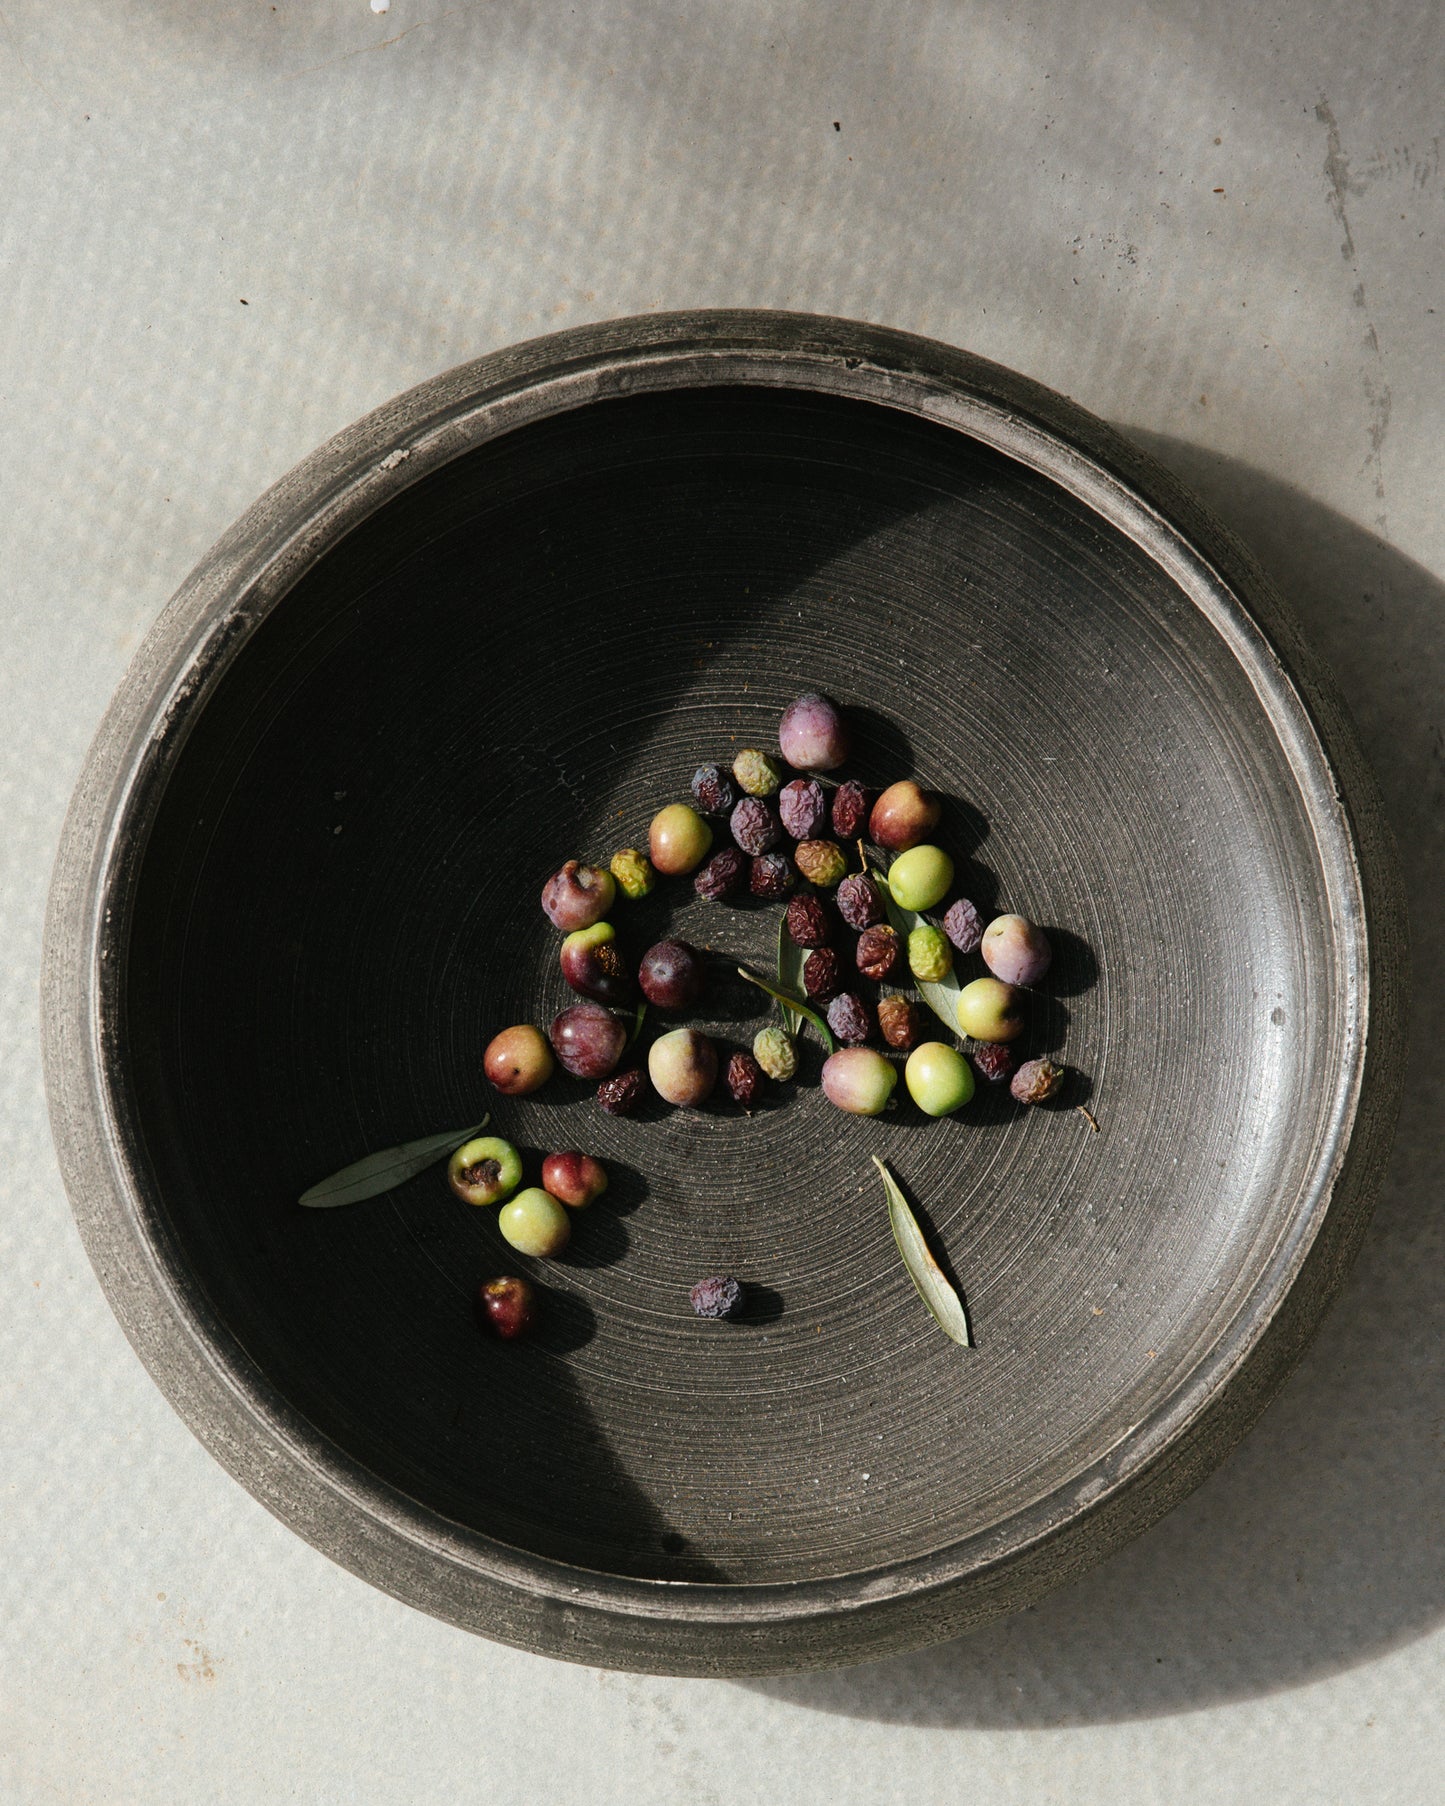 Short Angular Ceramic Serving Bowl, Black